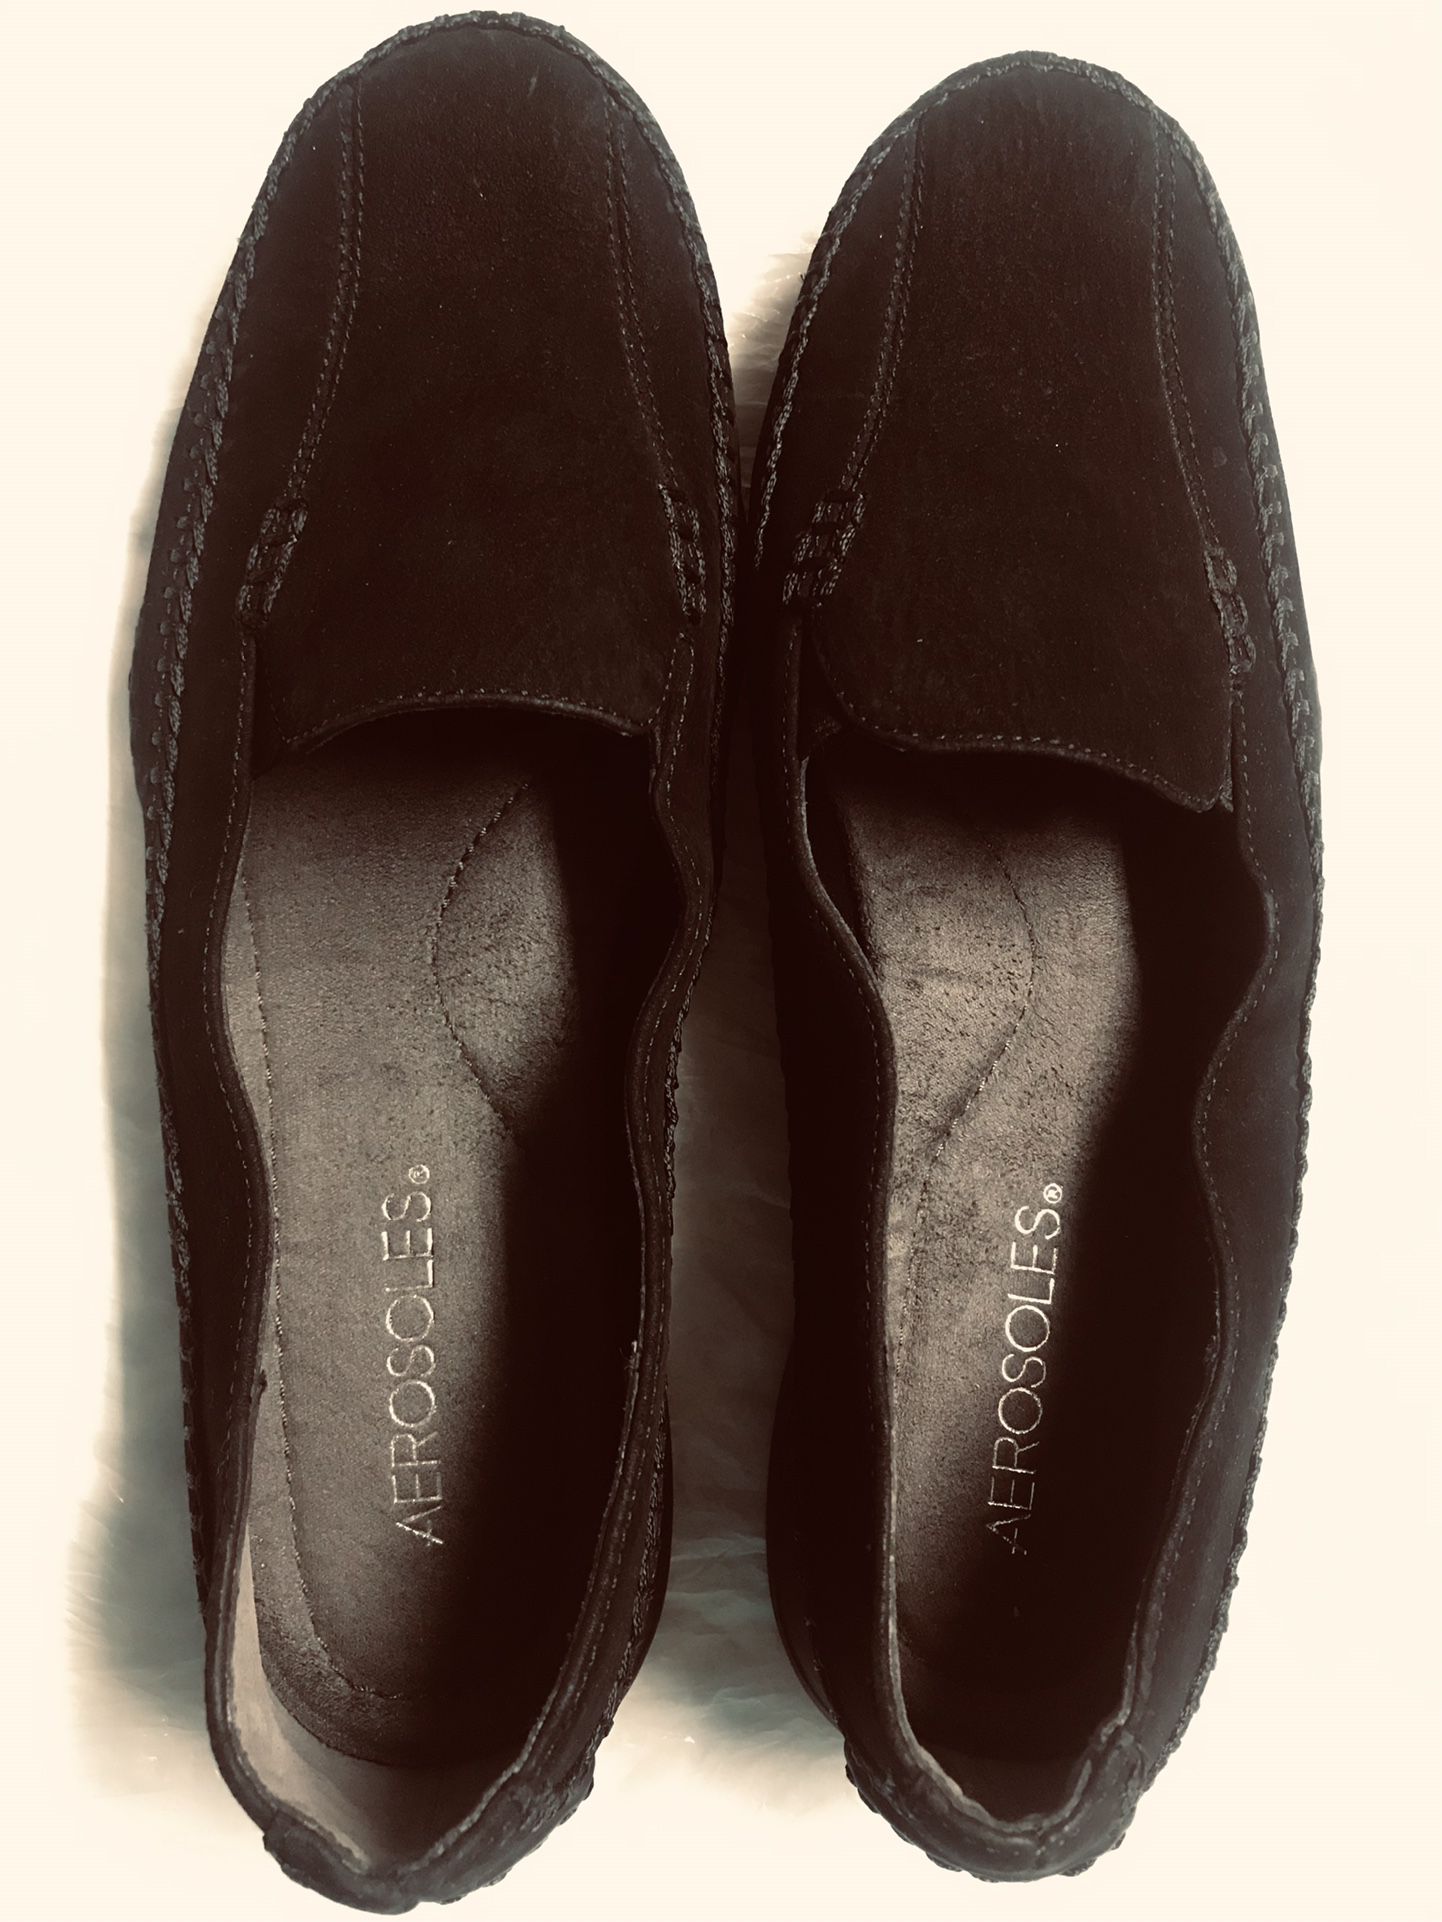 $10 OBO Women’s So Soft & Comfy Black Suede Aerosoles Shoes Size 8